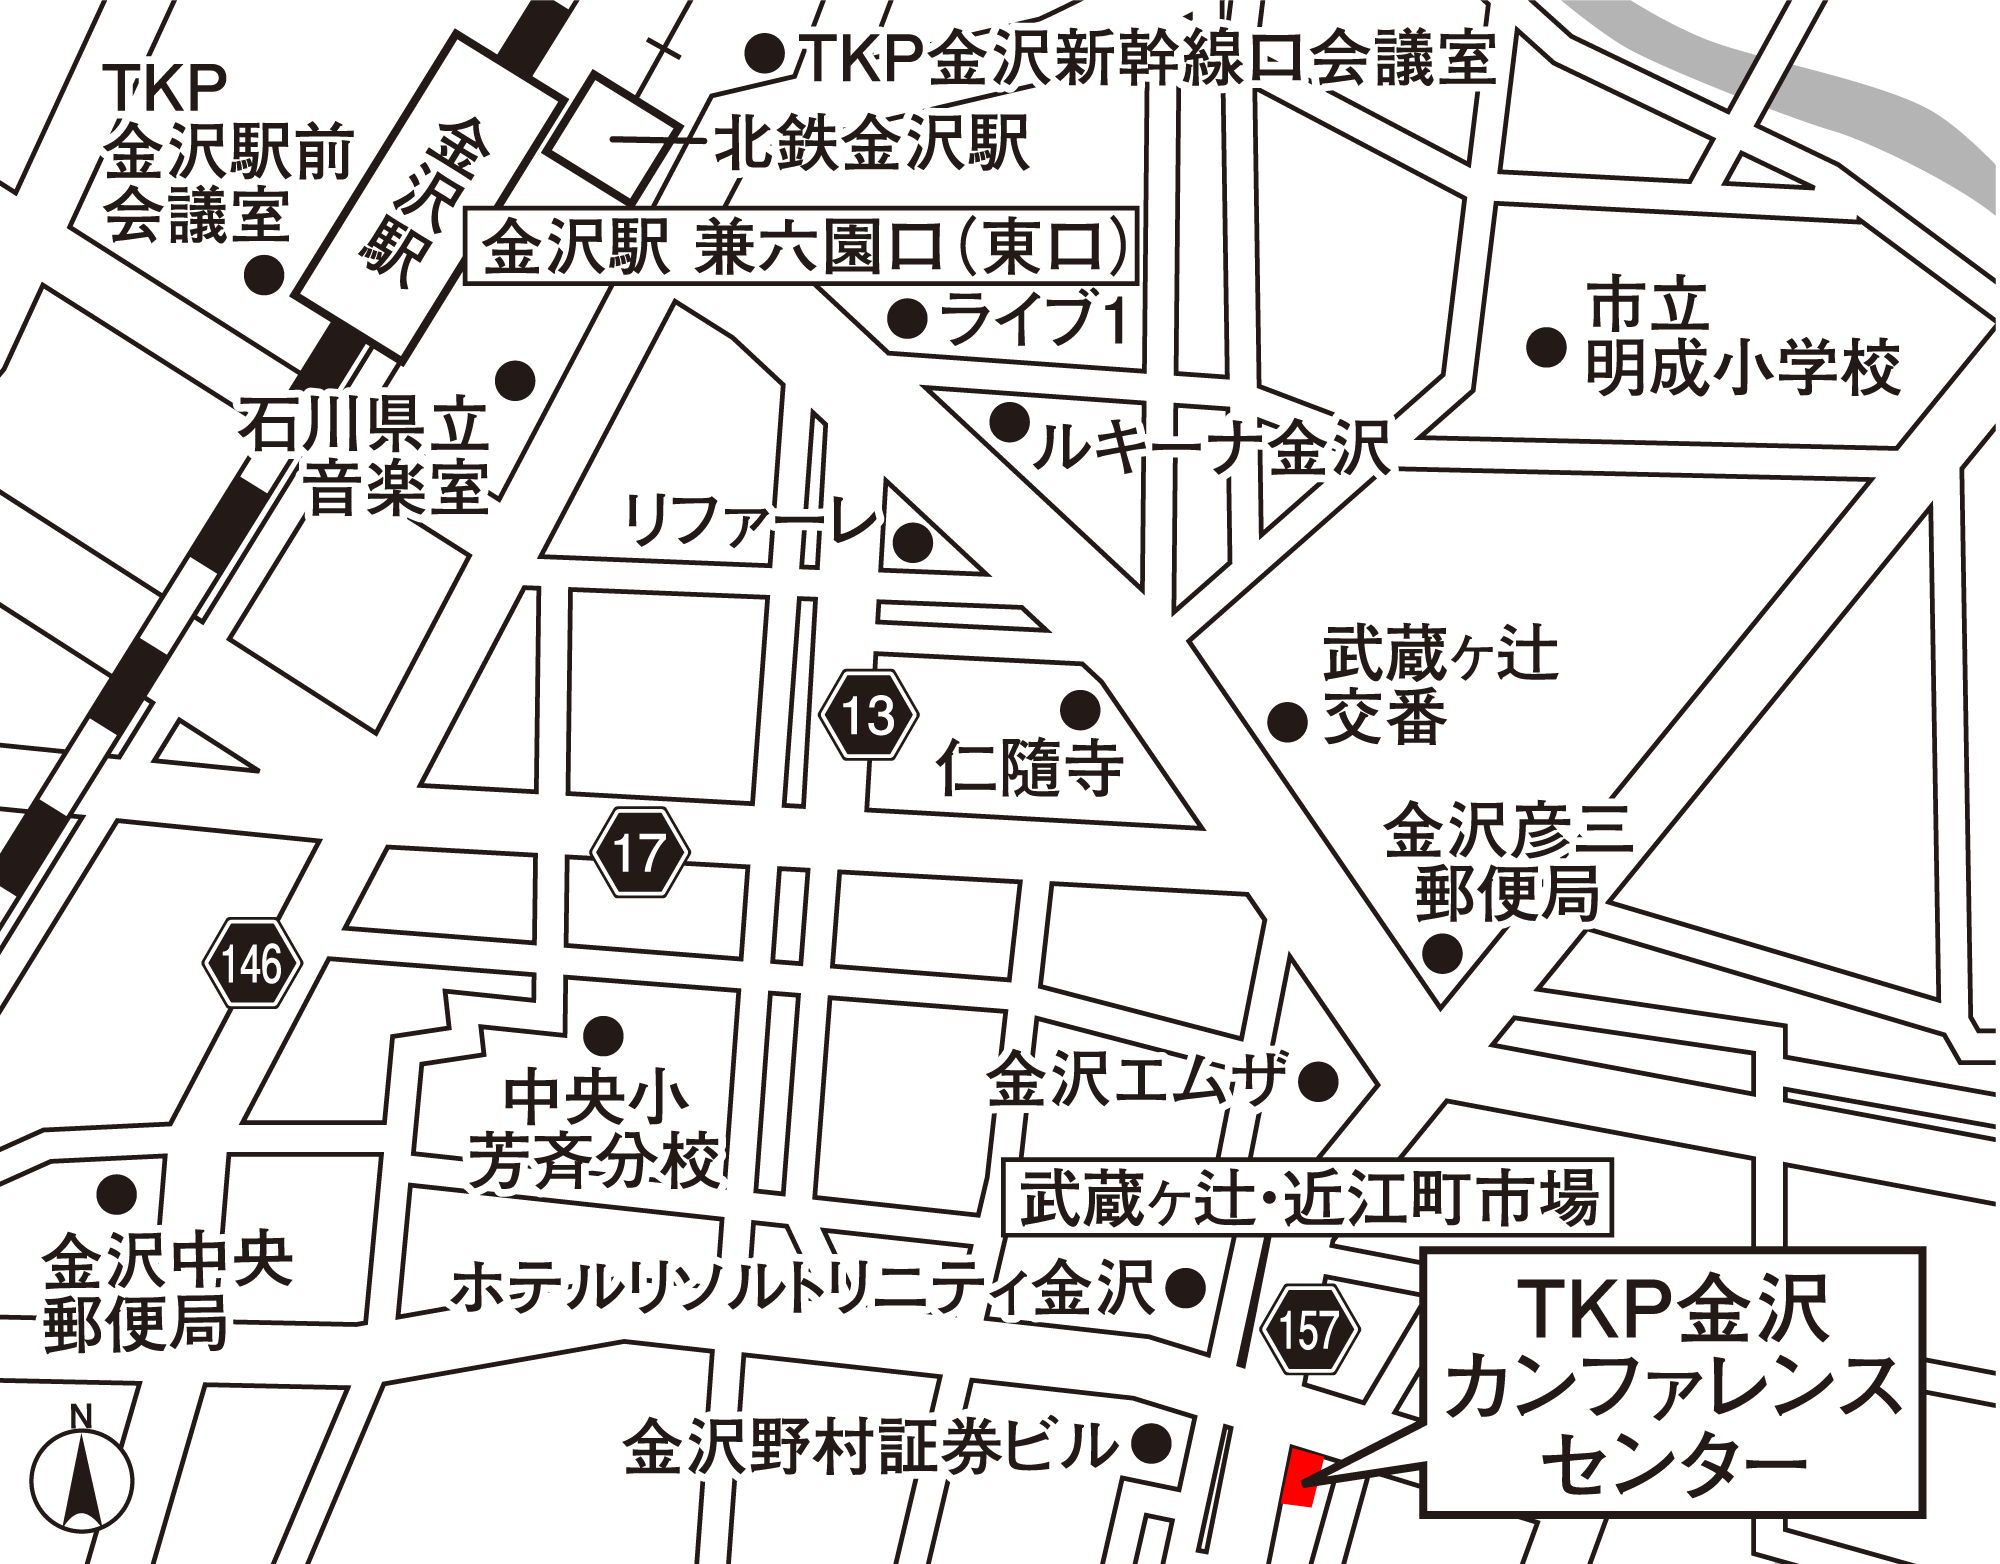 TKP金沢カンファレンスセンター 地図